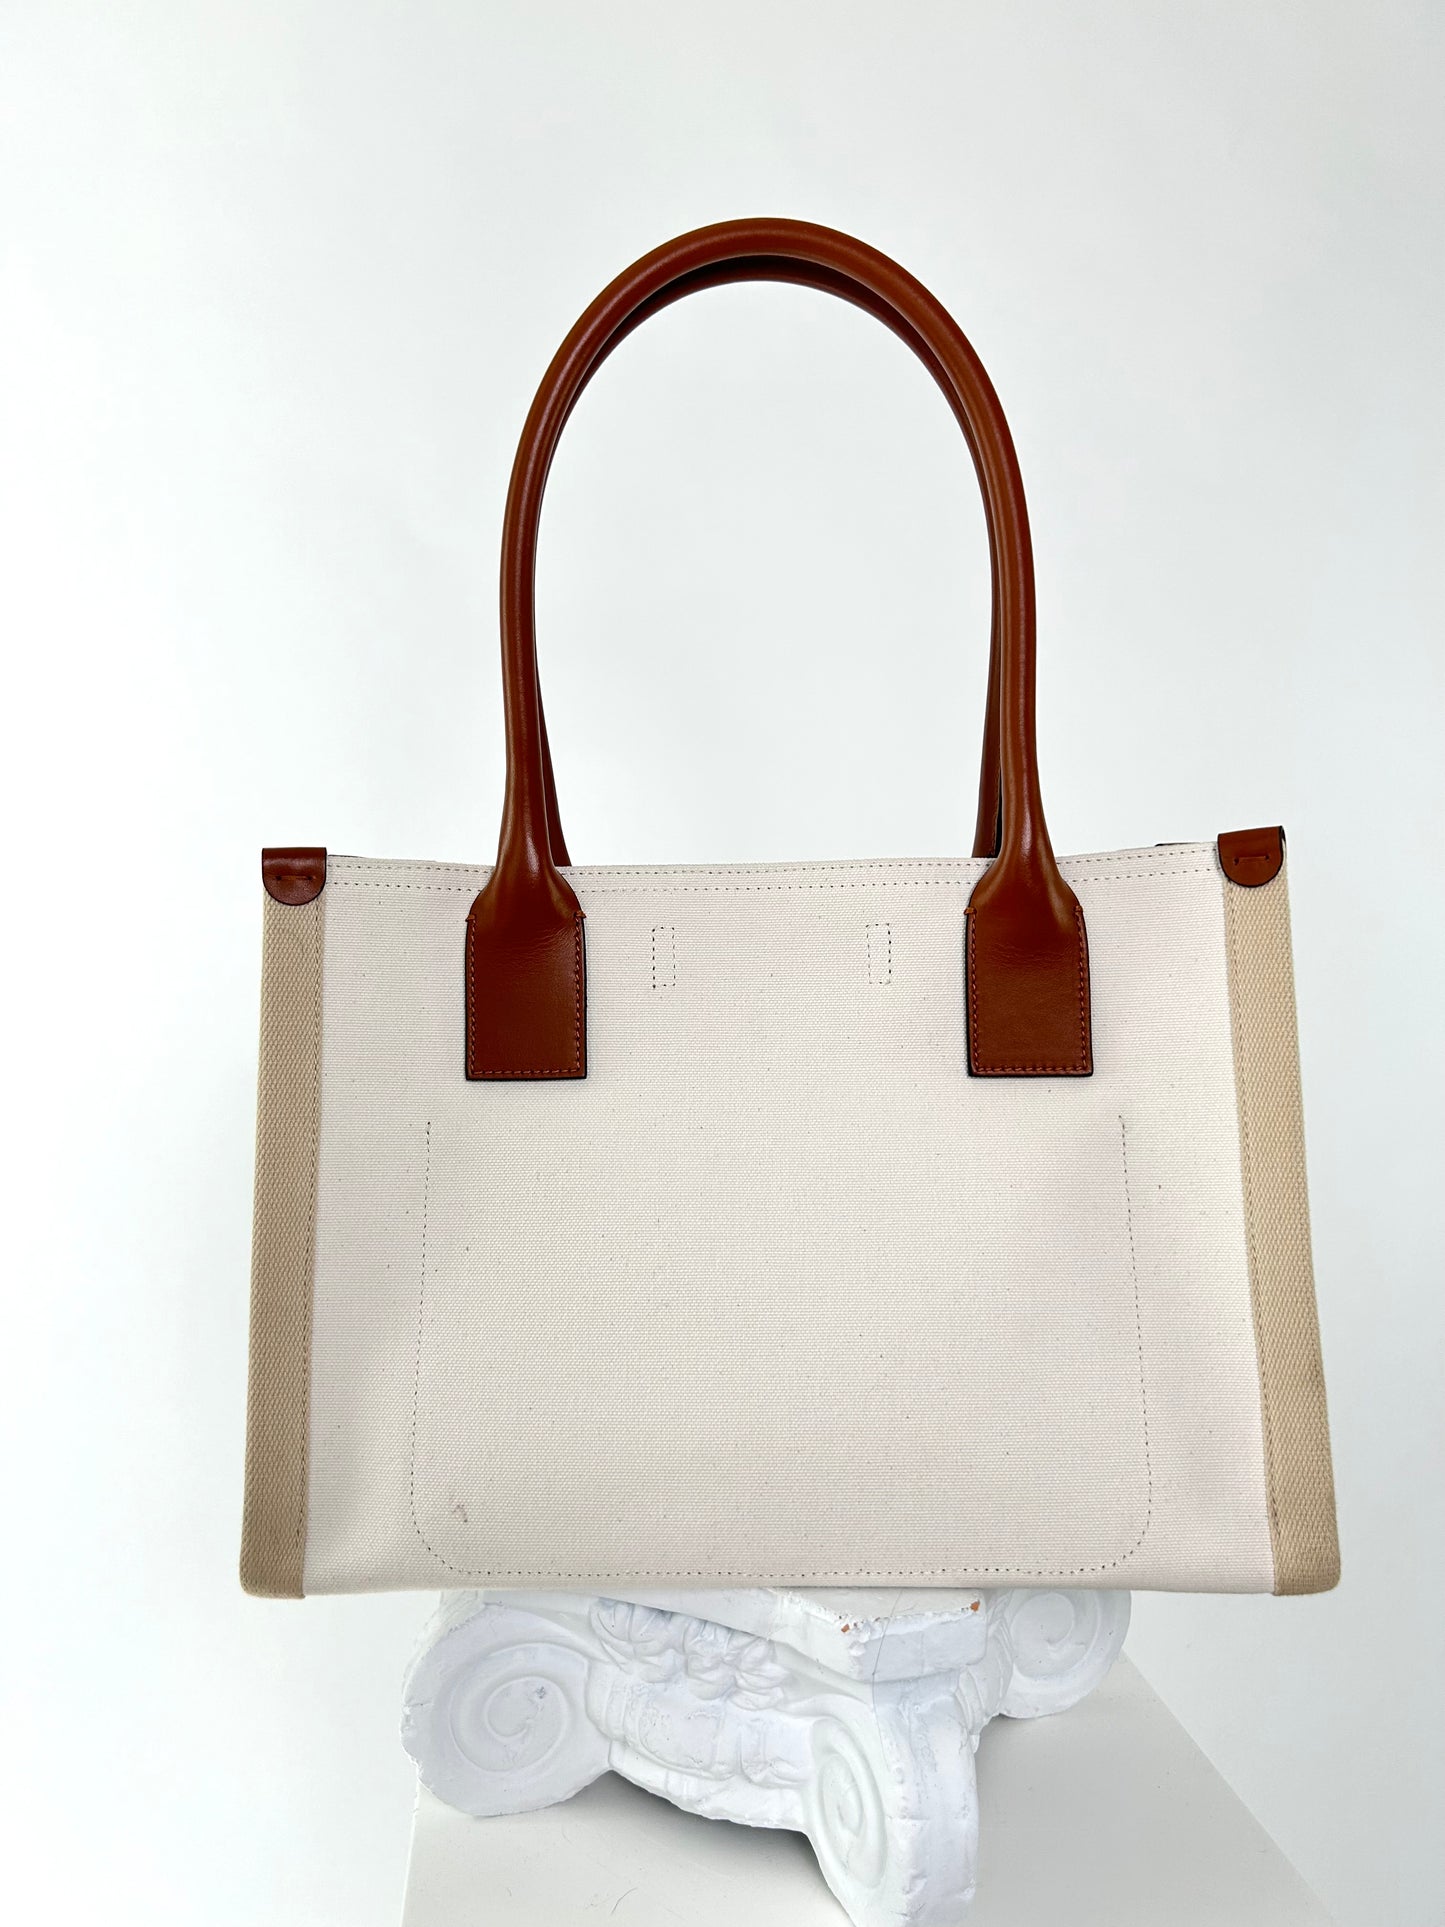 Christian Louboutin White Canvas Handbag